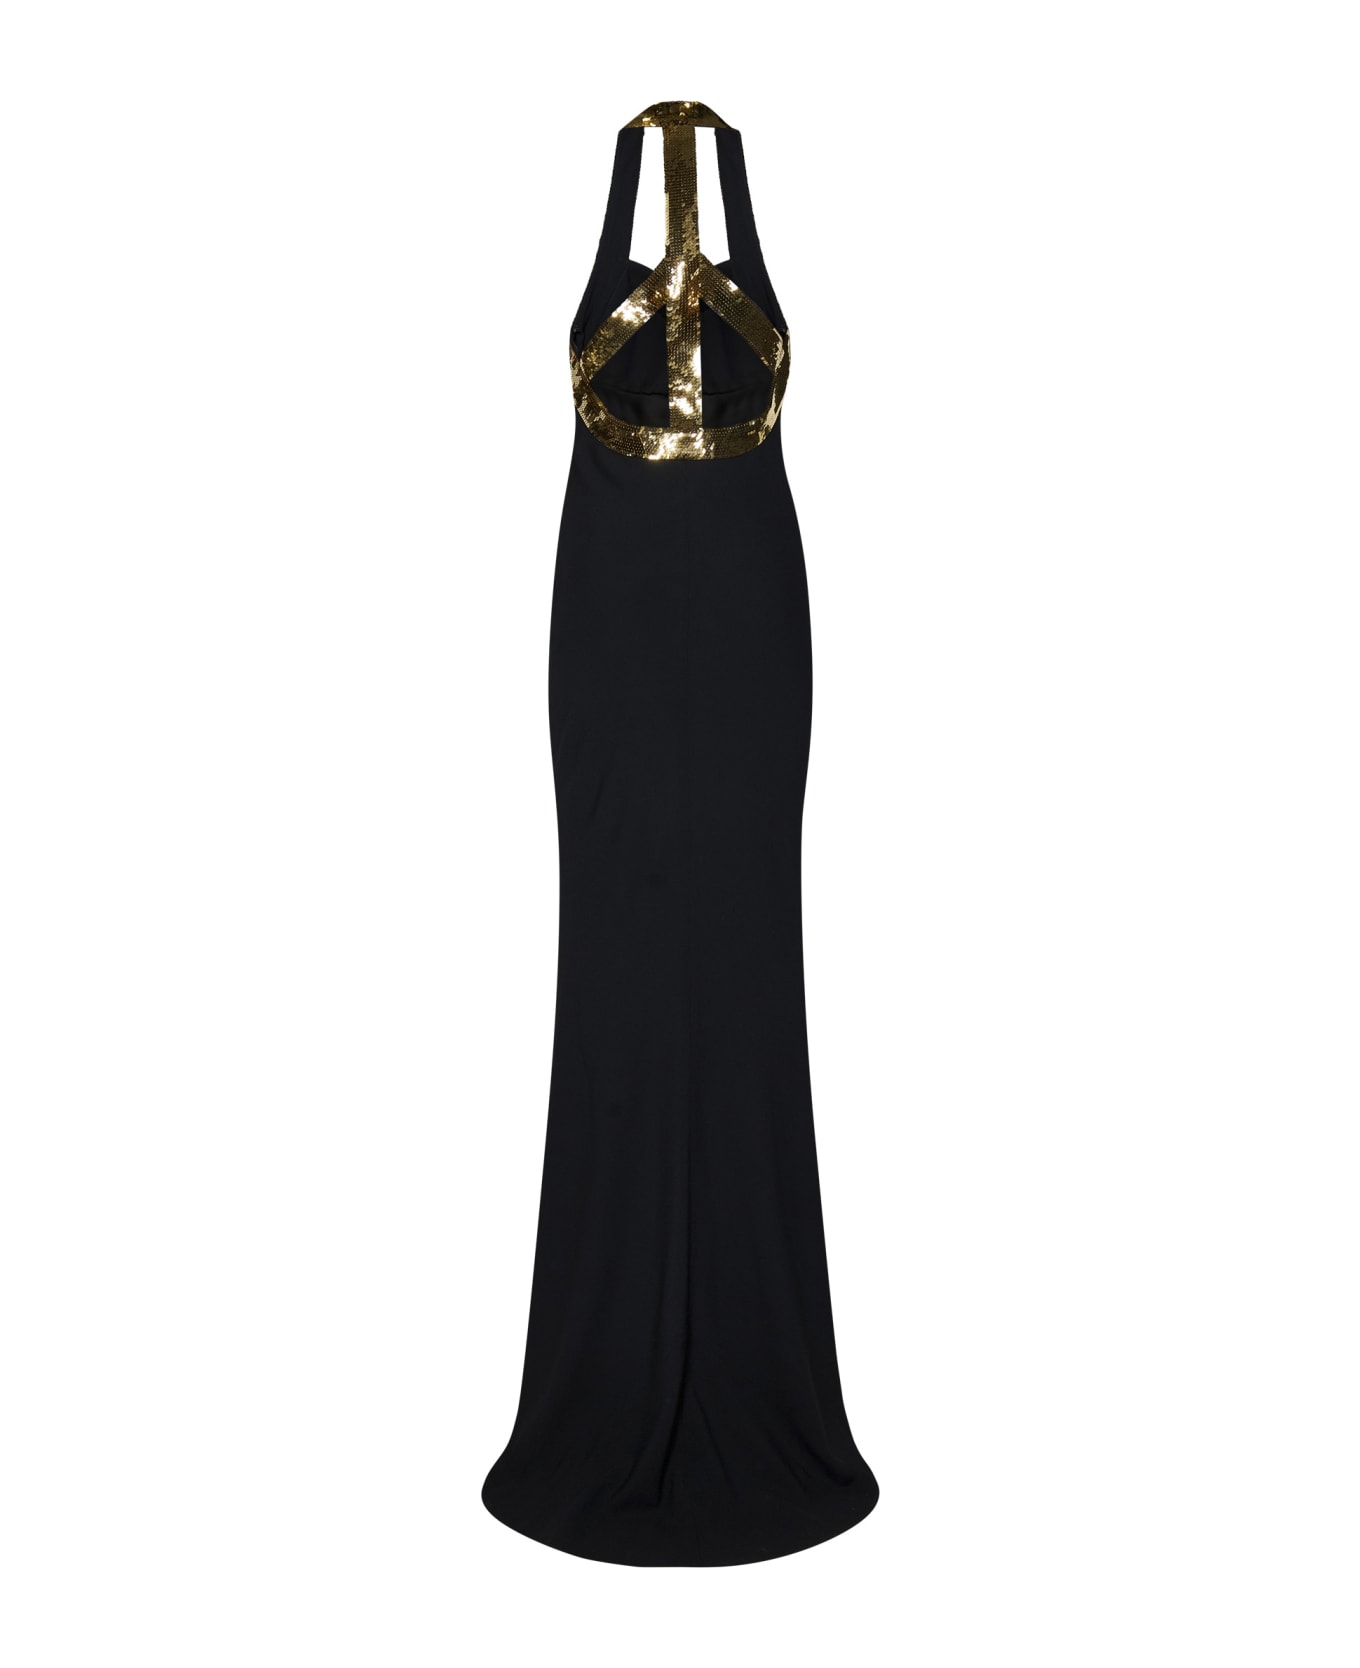 Moschino Dress - Black ワンピース＆ドレス